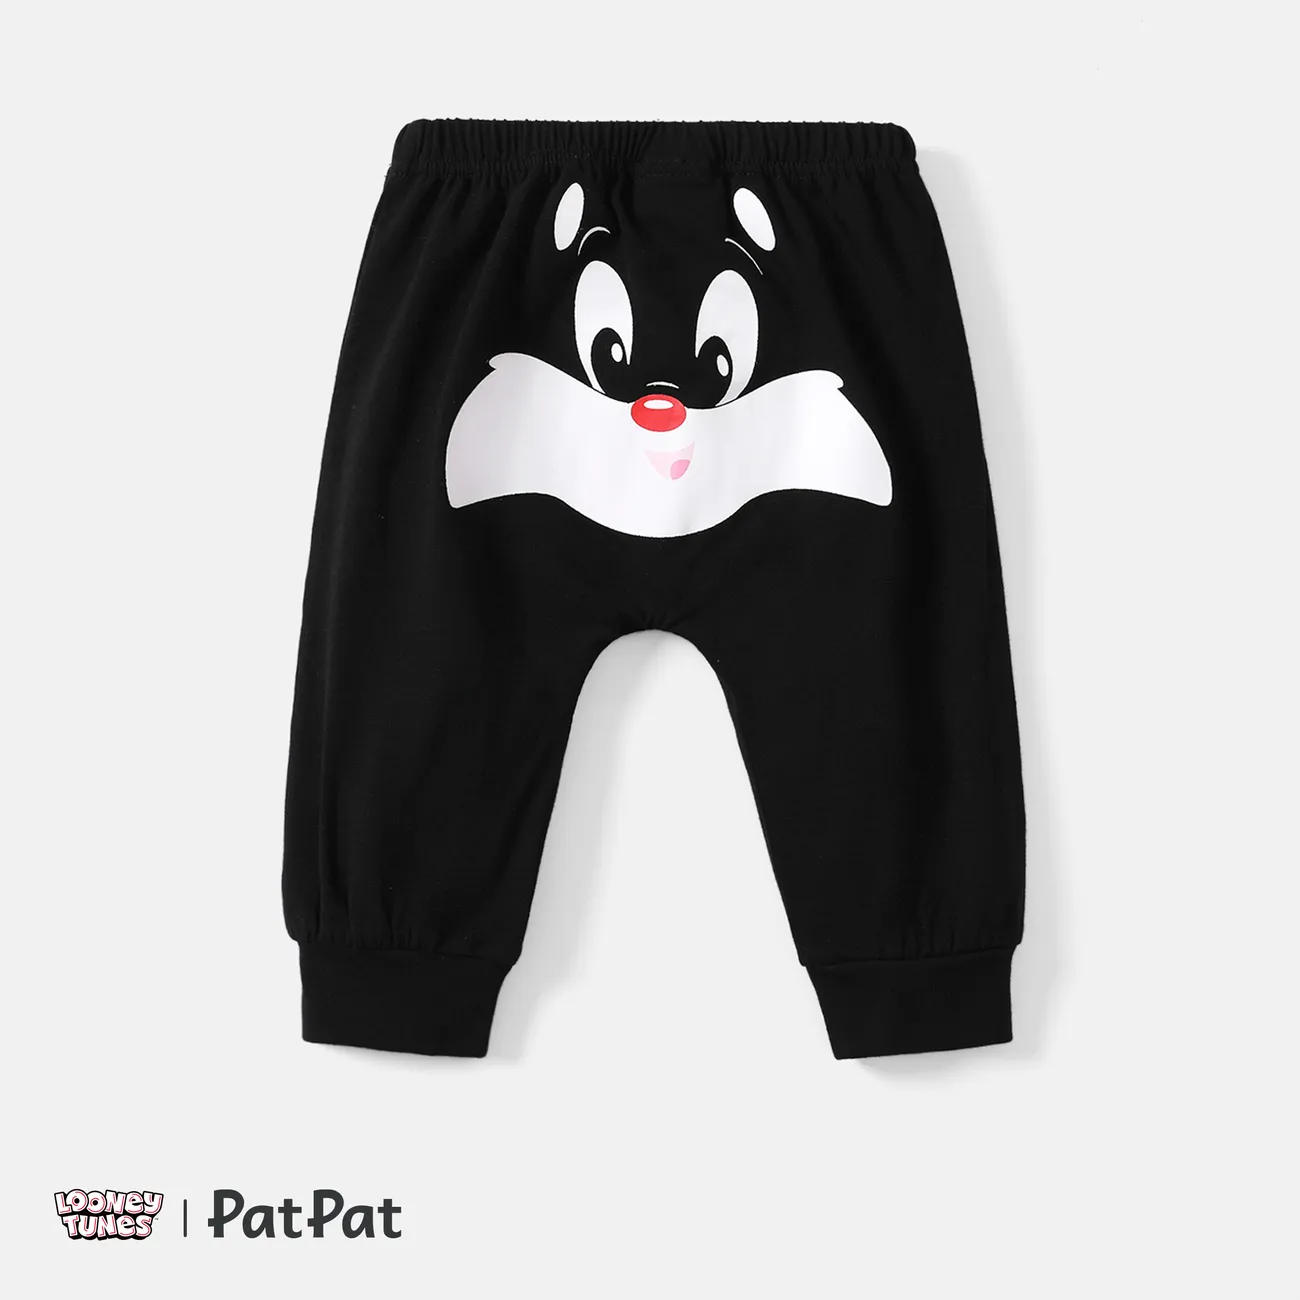 Looney Tunes Baby Boy/Girl Cartoon Animal Print Cotton Sweatpants Black big image 1